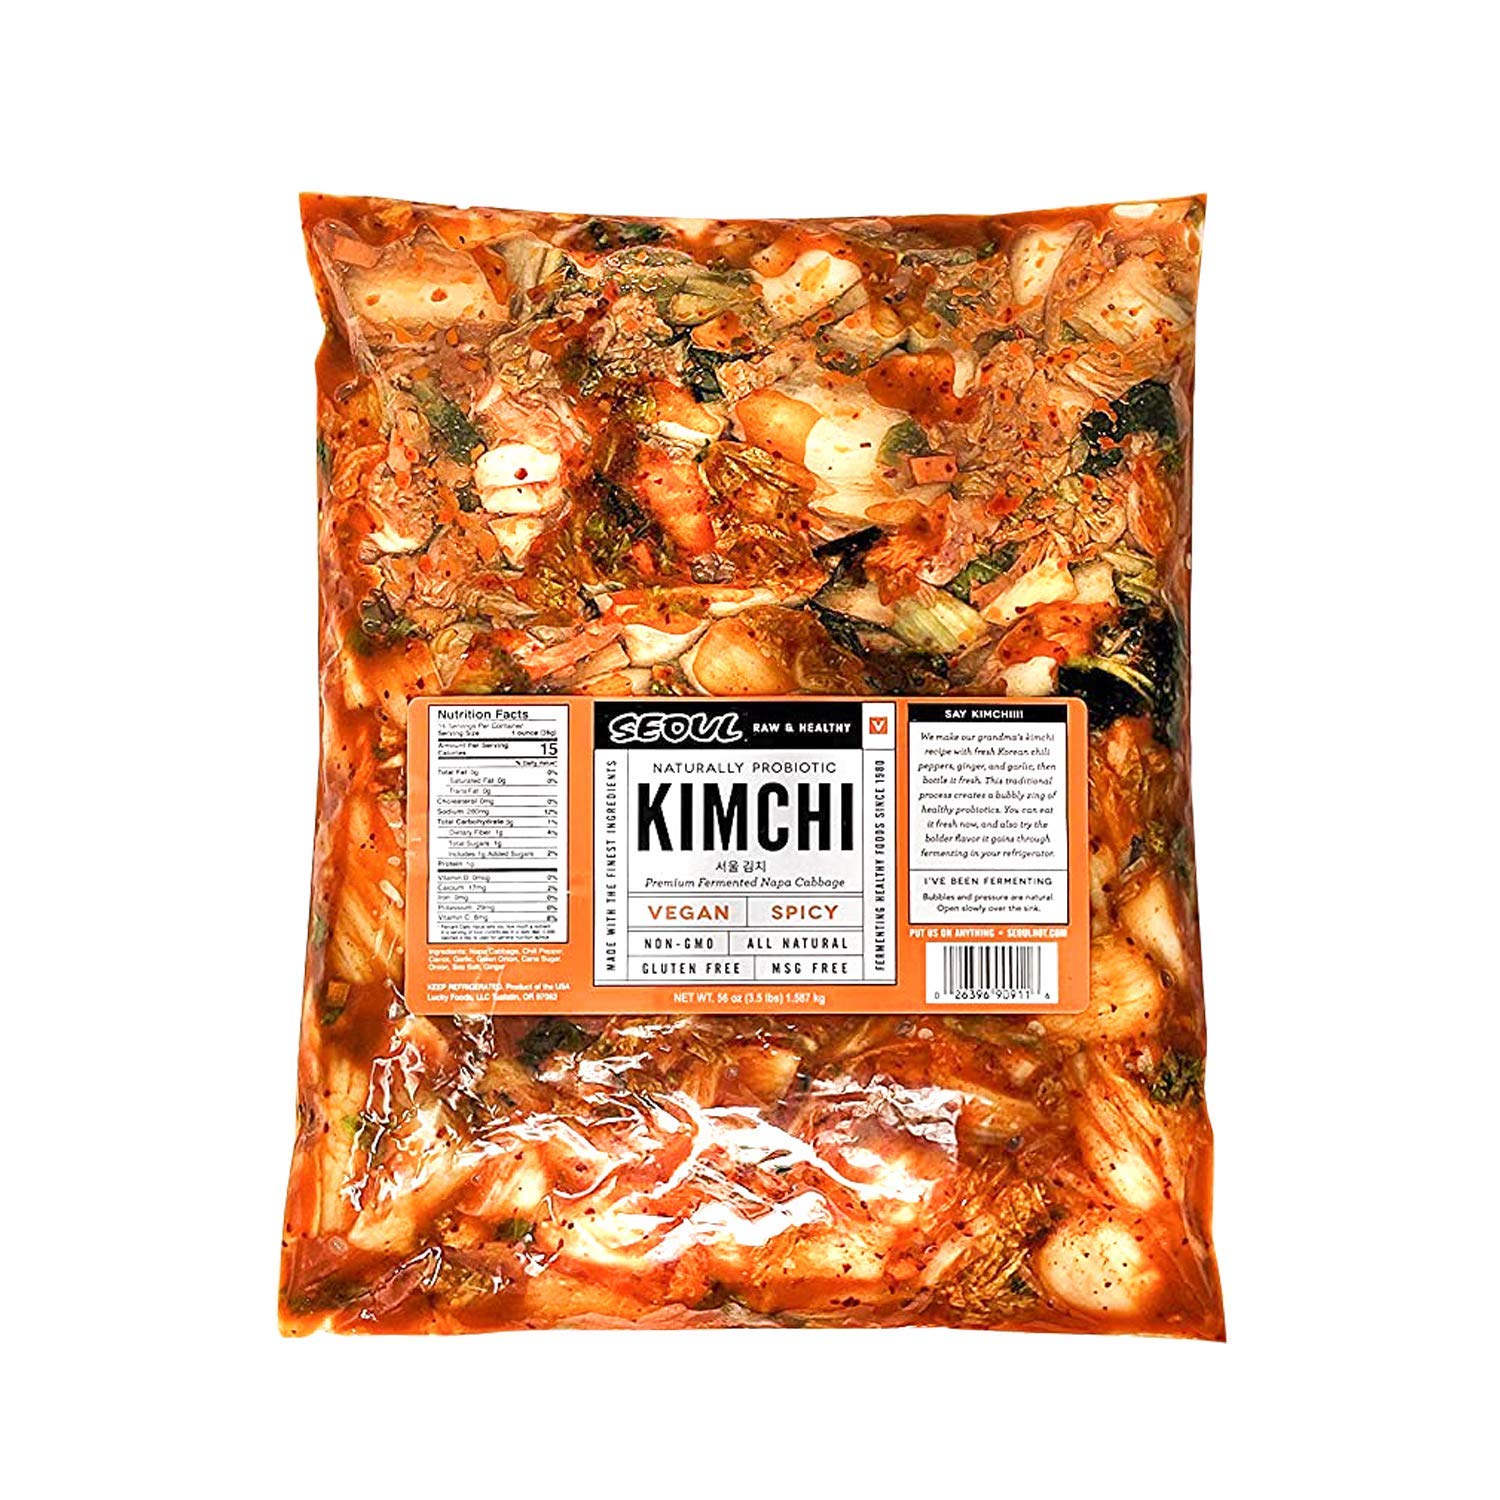 Lucky Foods Seoul Kimchi (Pack of 1) - Authentic Made to Order Korean Kimchi (Spicy Vegan, 56 oz) Plant Based / Keto / Gluten Free / Vegan / Non GM...